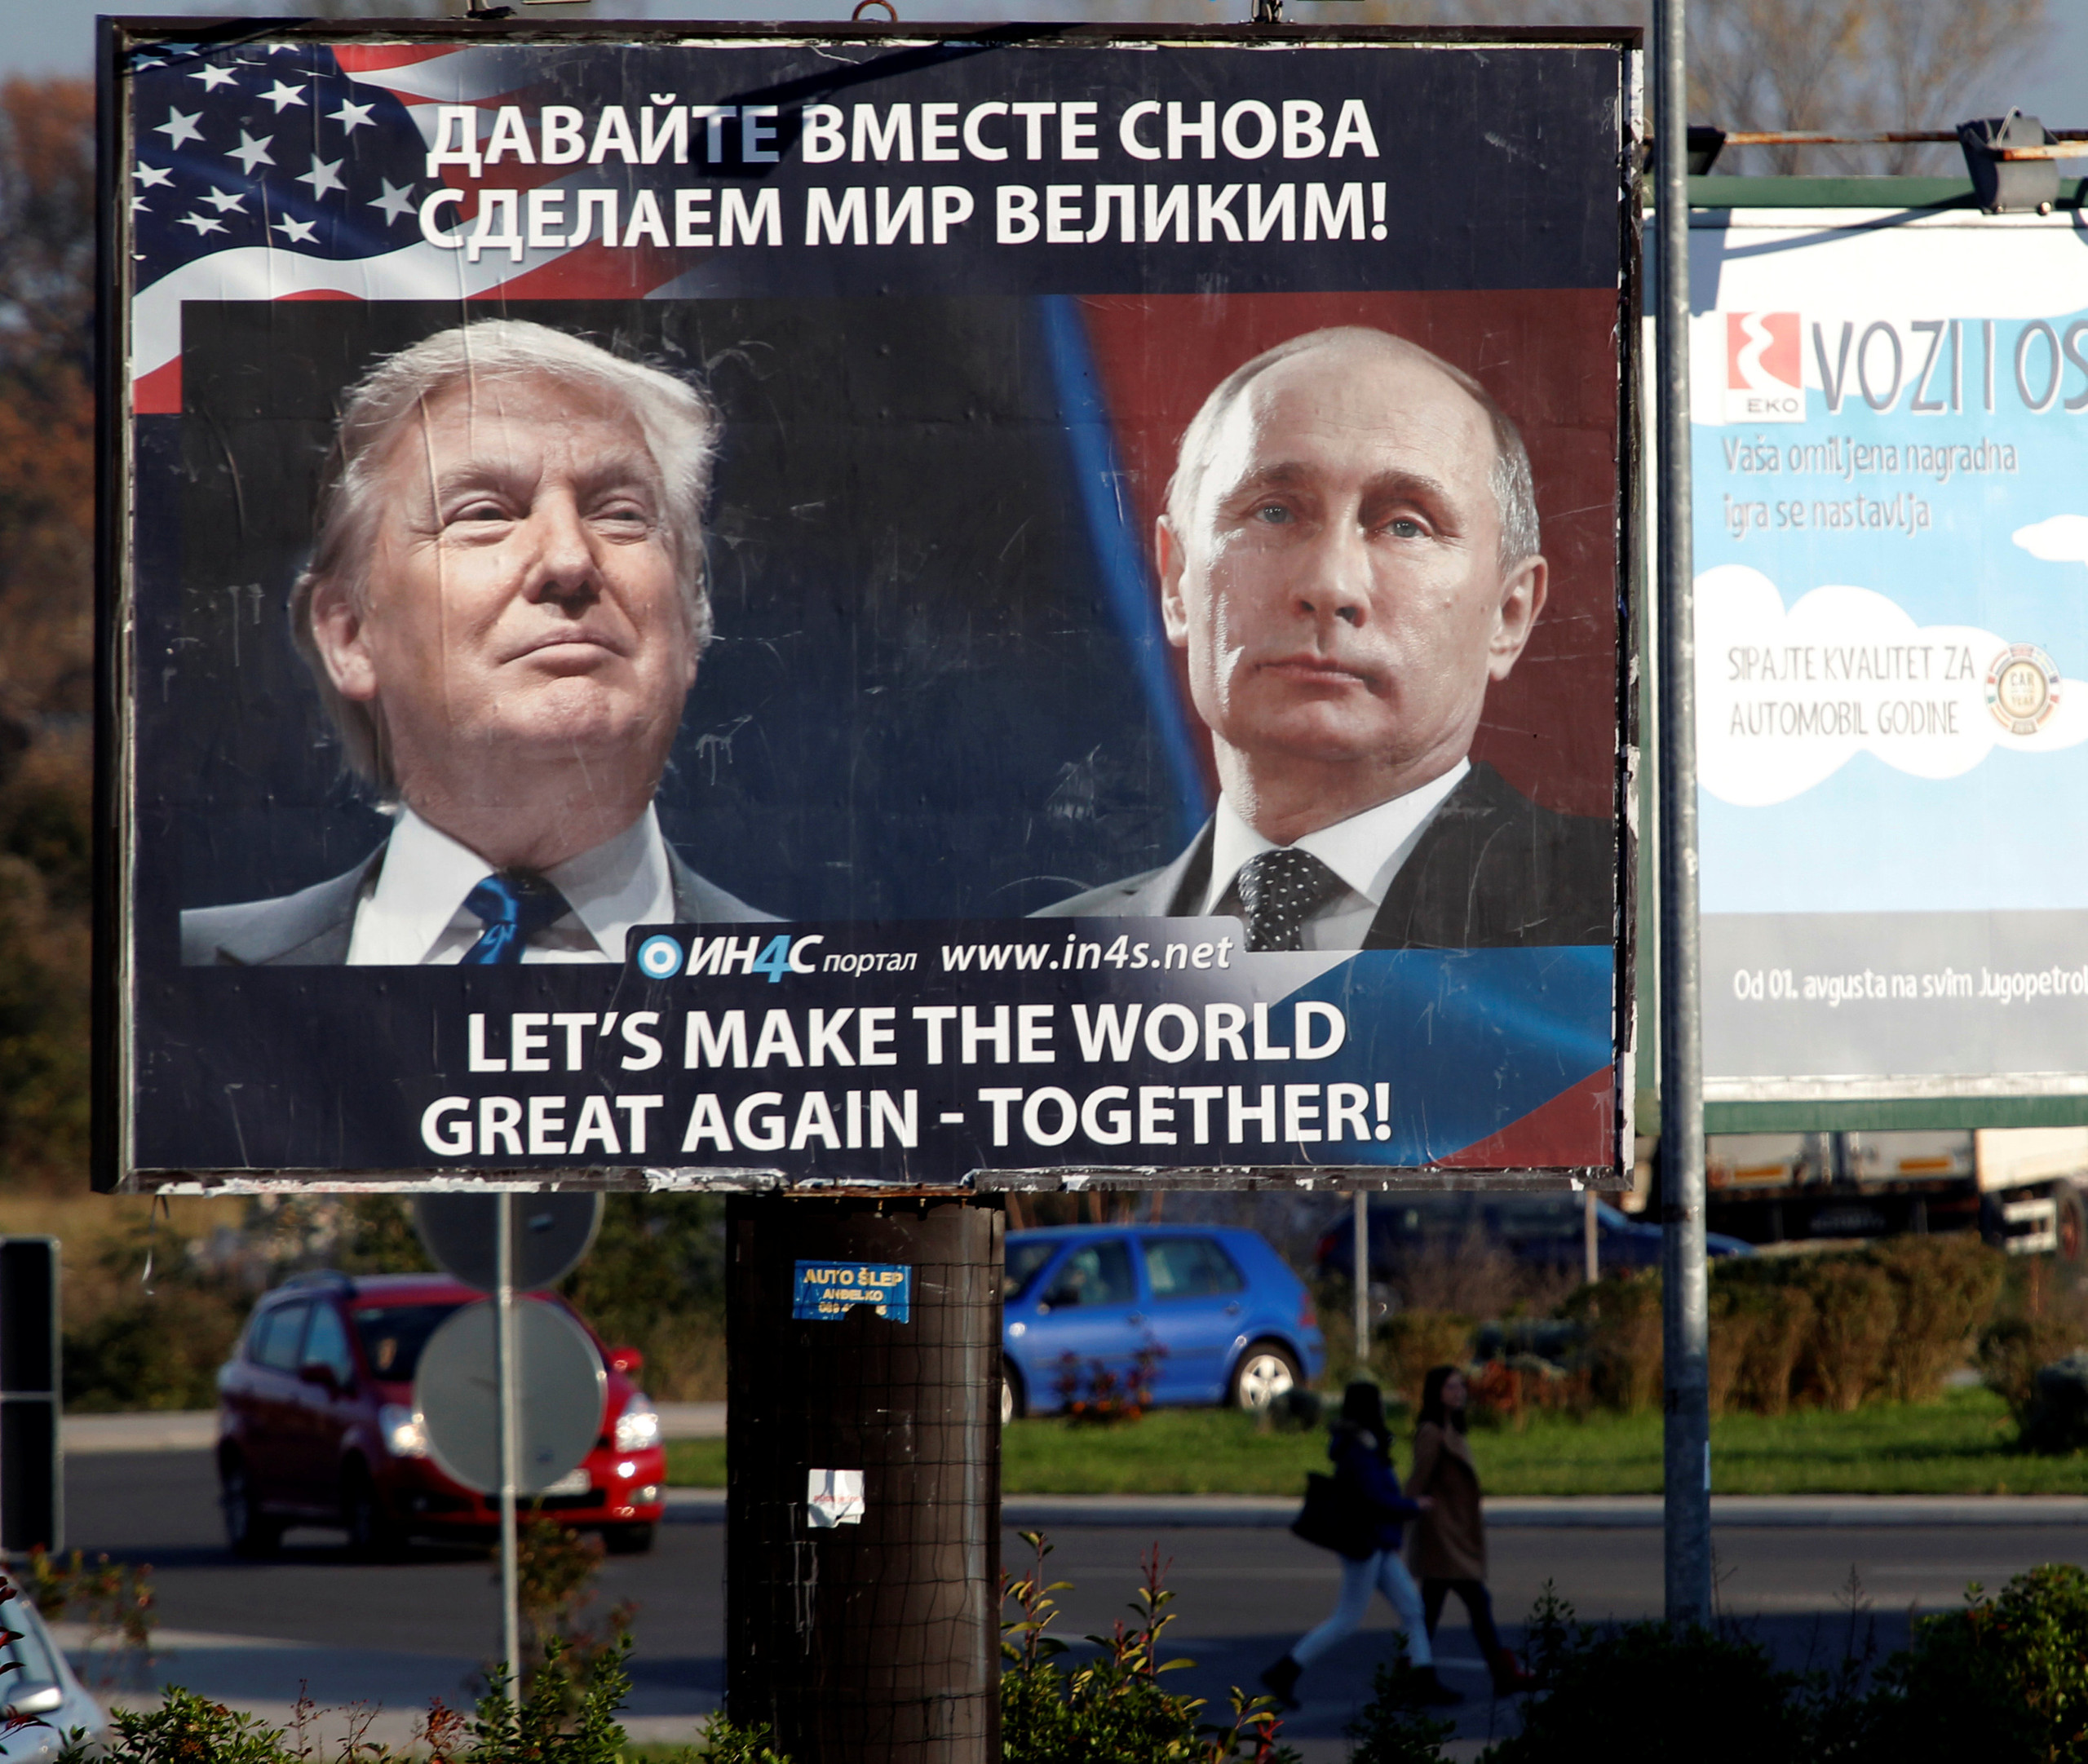 Pedestrians cross the street behind a billboard showing a pictures of US president-elect Donald Trump and Russian President Vladimir Putin in Danilovgrad, Montenegro, November 16. 2016. REUTERS/Stevo Vasiljevic